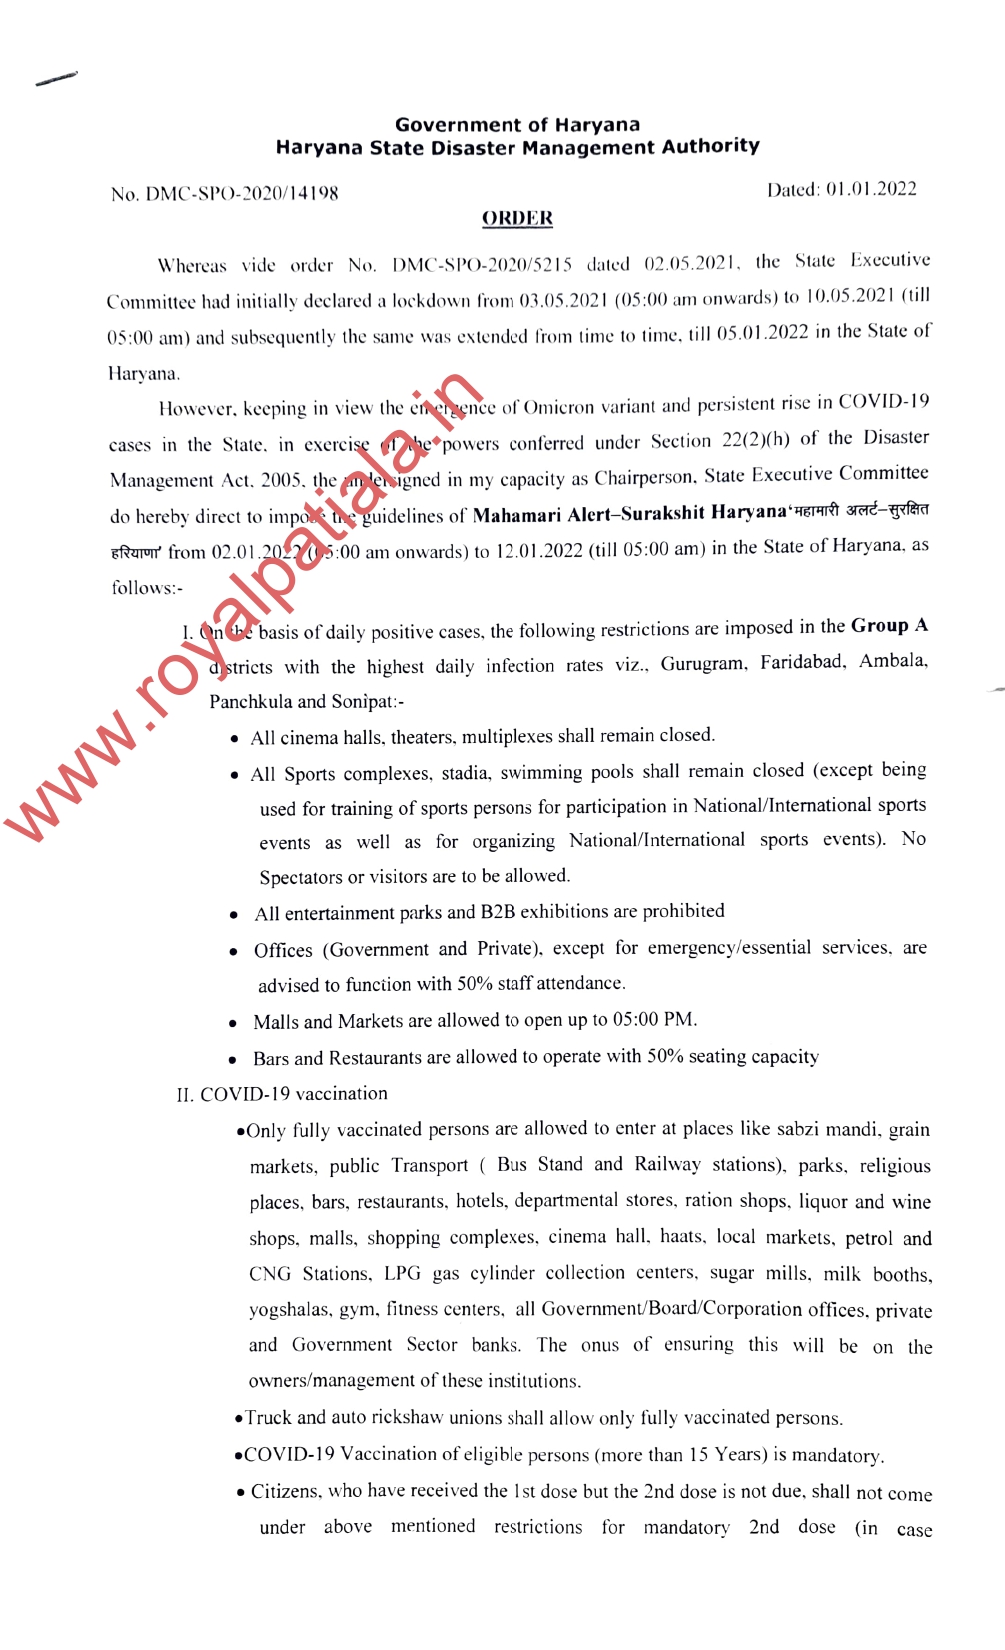 Covid restrictions- Haryana government issues “Mahamari Alert- Surakshit Haryana”